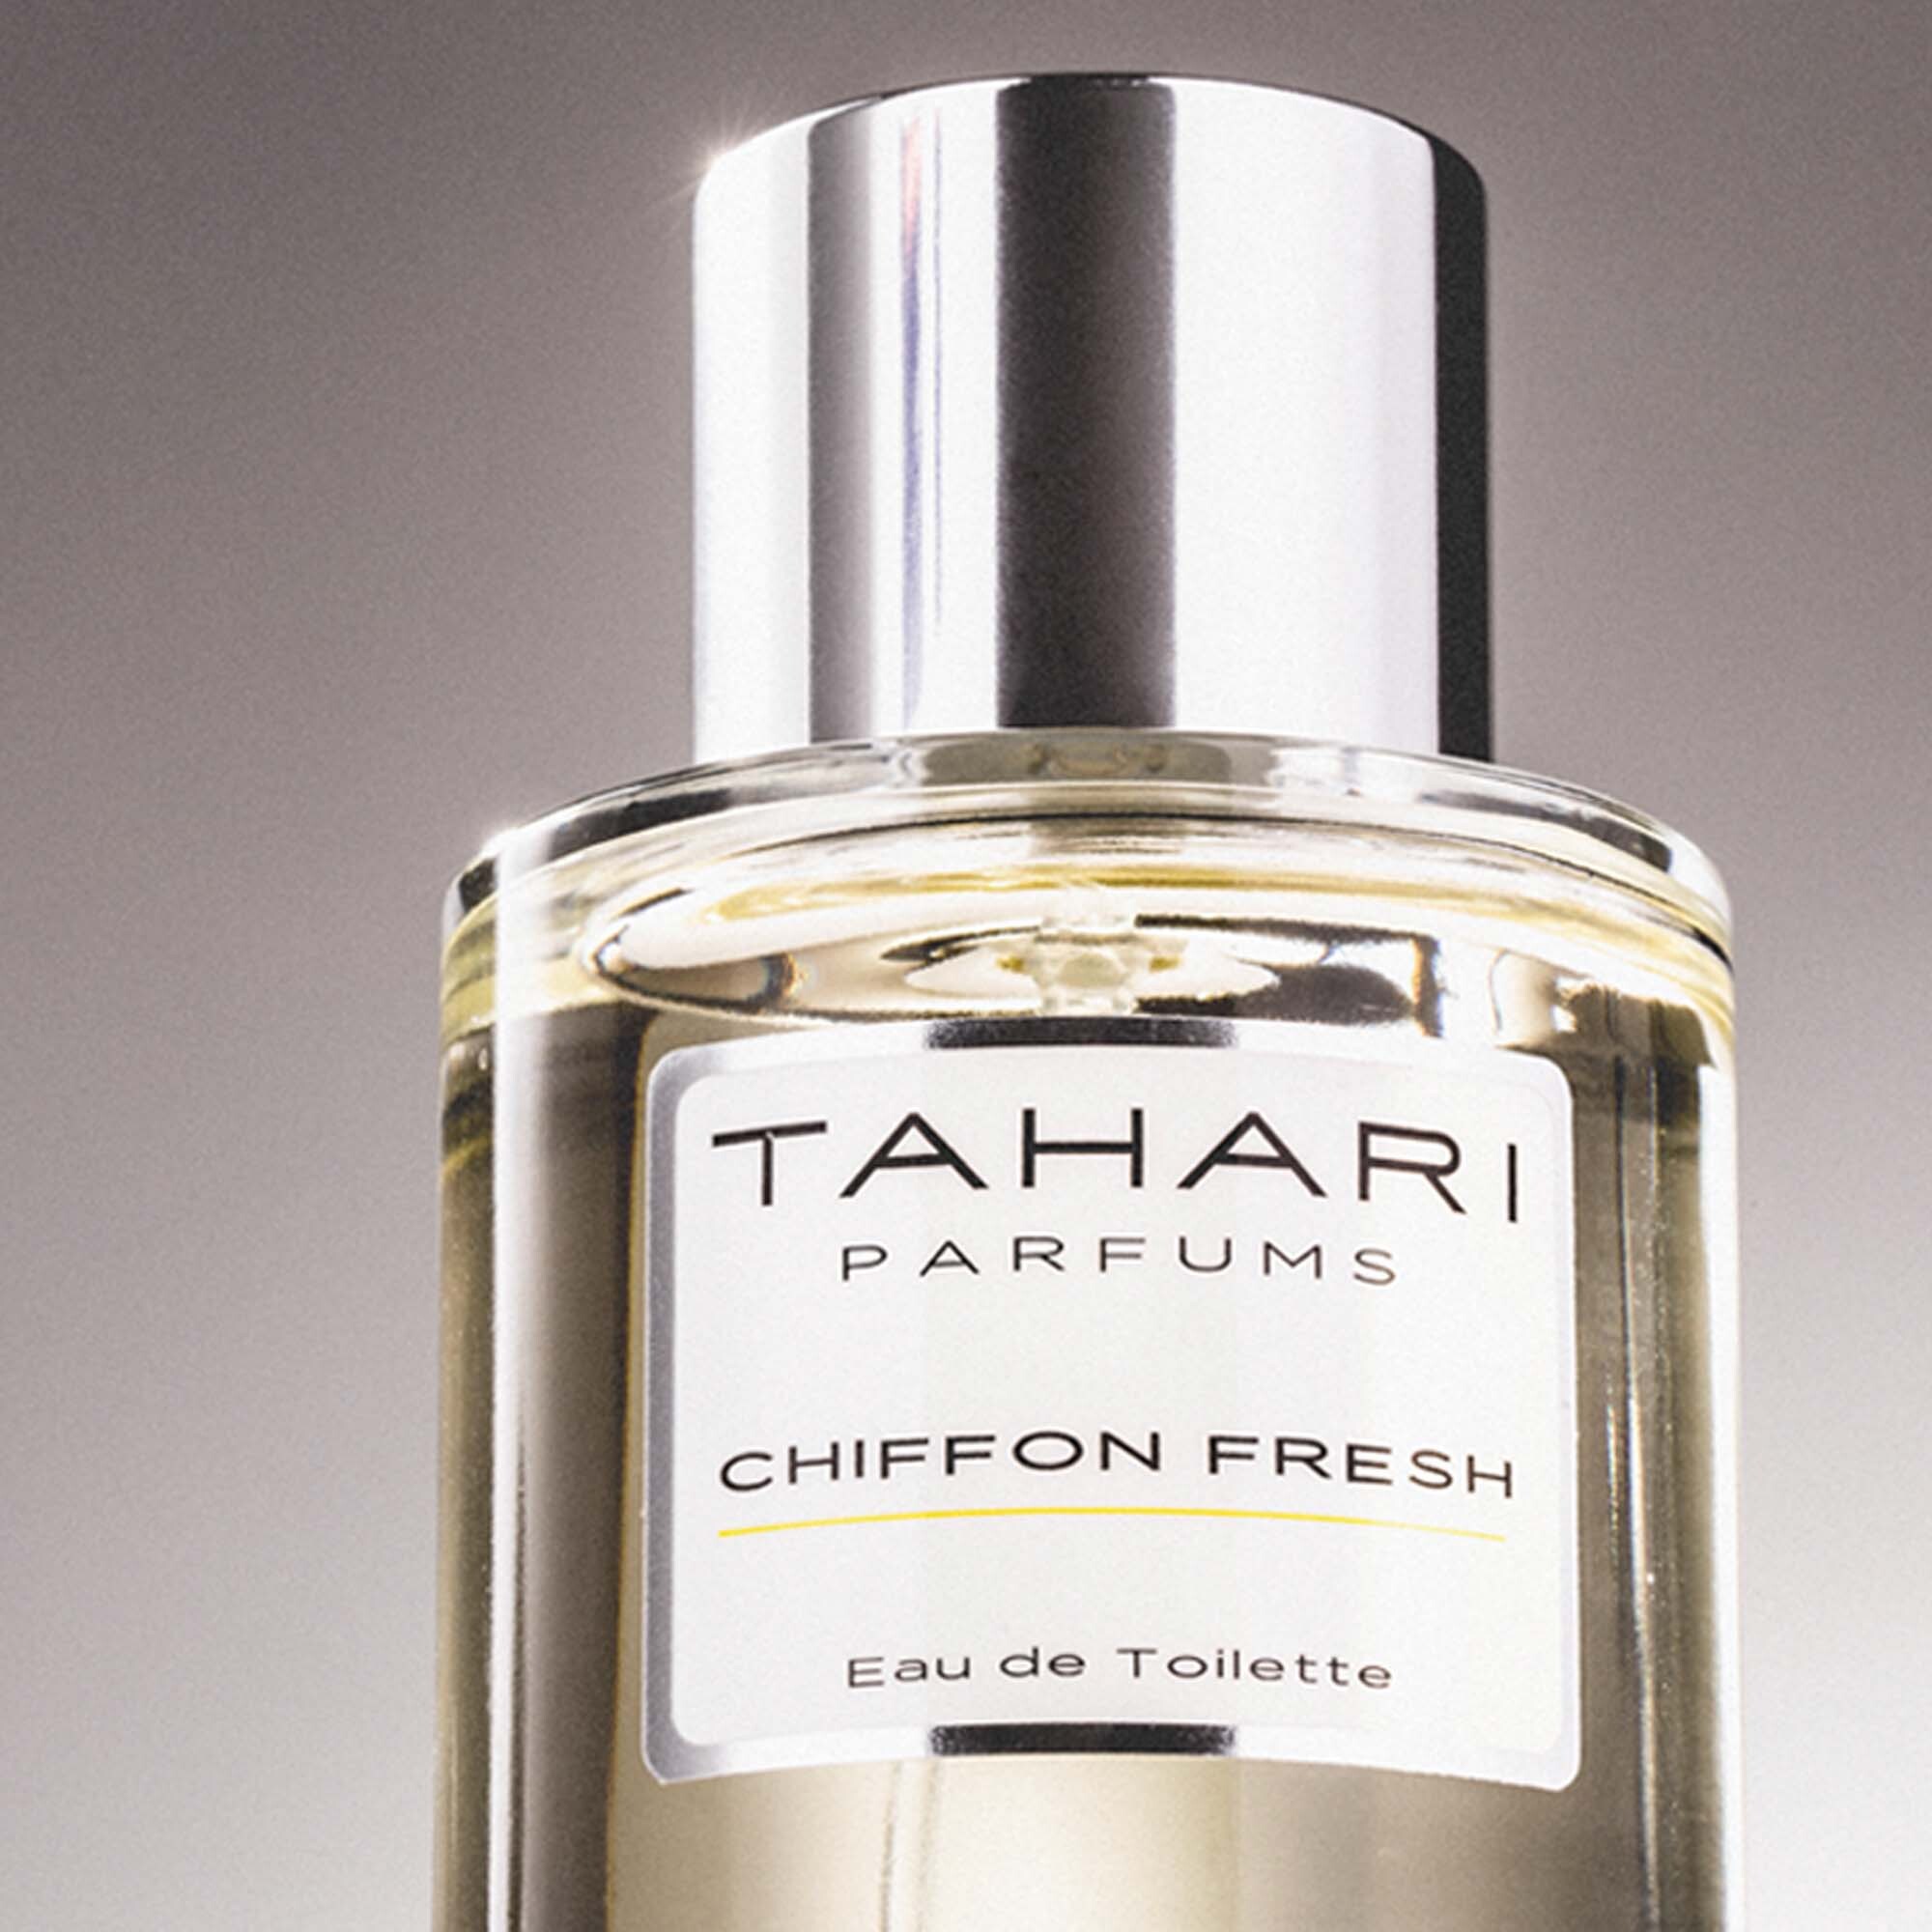 Tahari Parfums - Chiffon Fresh